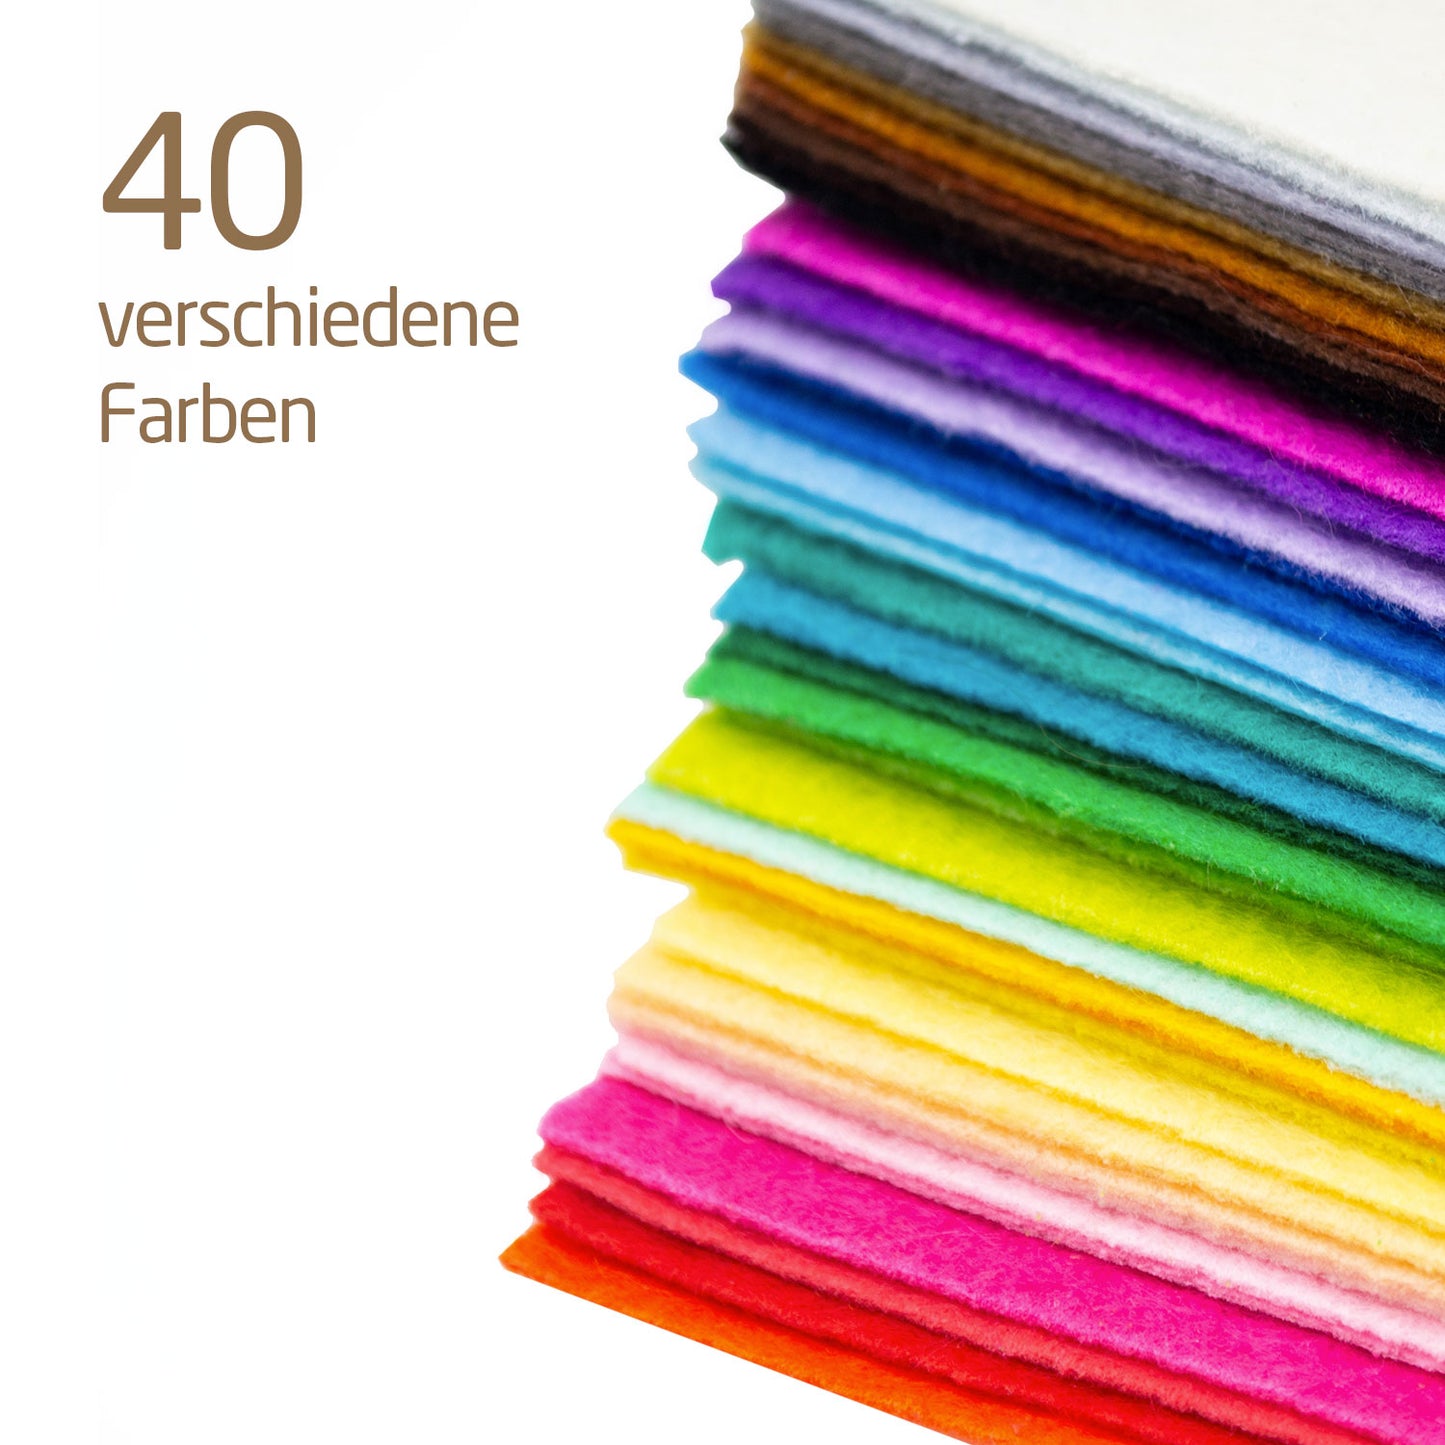 Bastelfilz - Nachhaltig | XL Bastelset 30x30 cm. 80 Blätter. 40 Farben